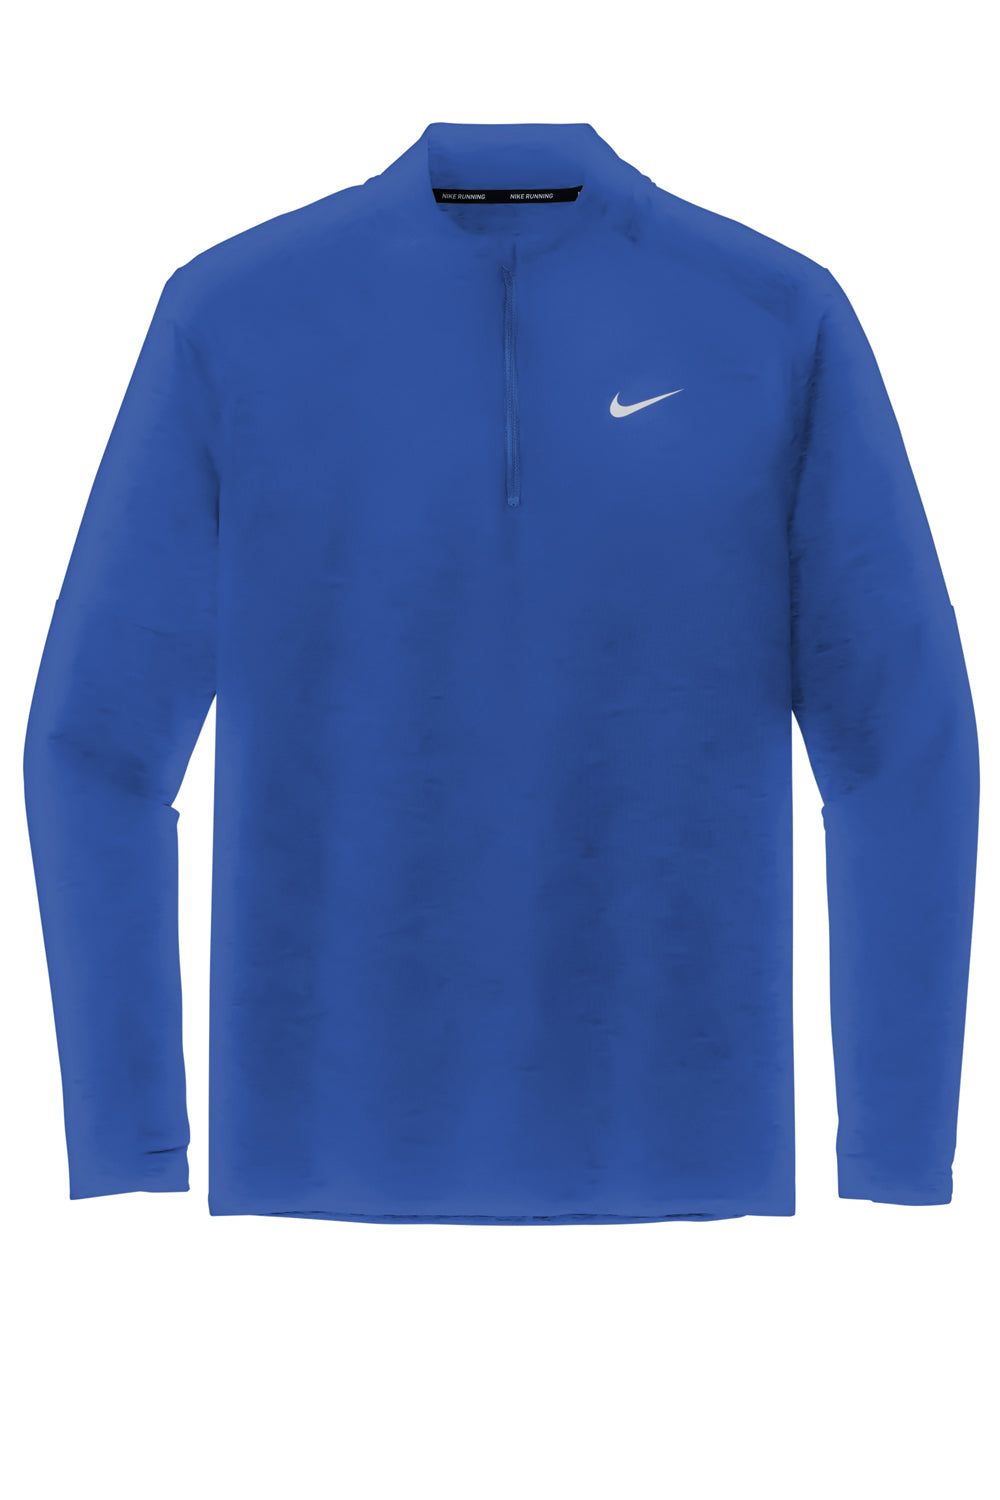 Nike NKDH4949 Mens Element Dri-Fit Moisture Wicking 1/4 Zip Sweatshirt Royal Blue Flat Front